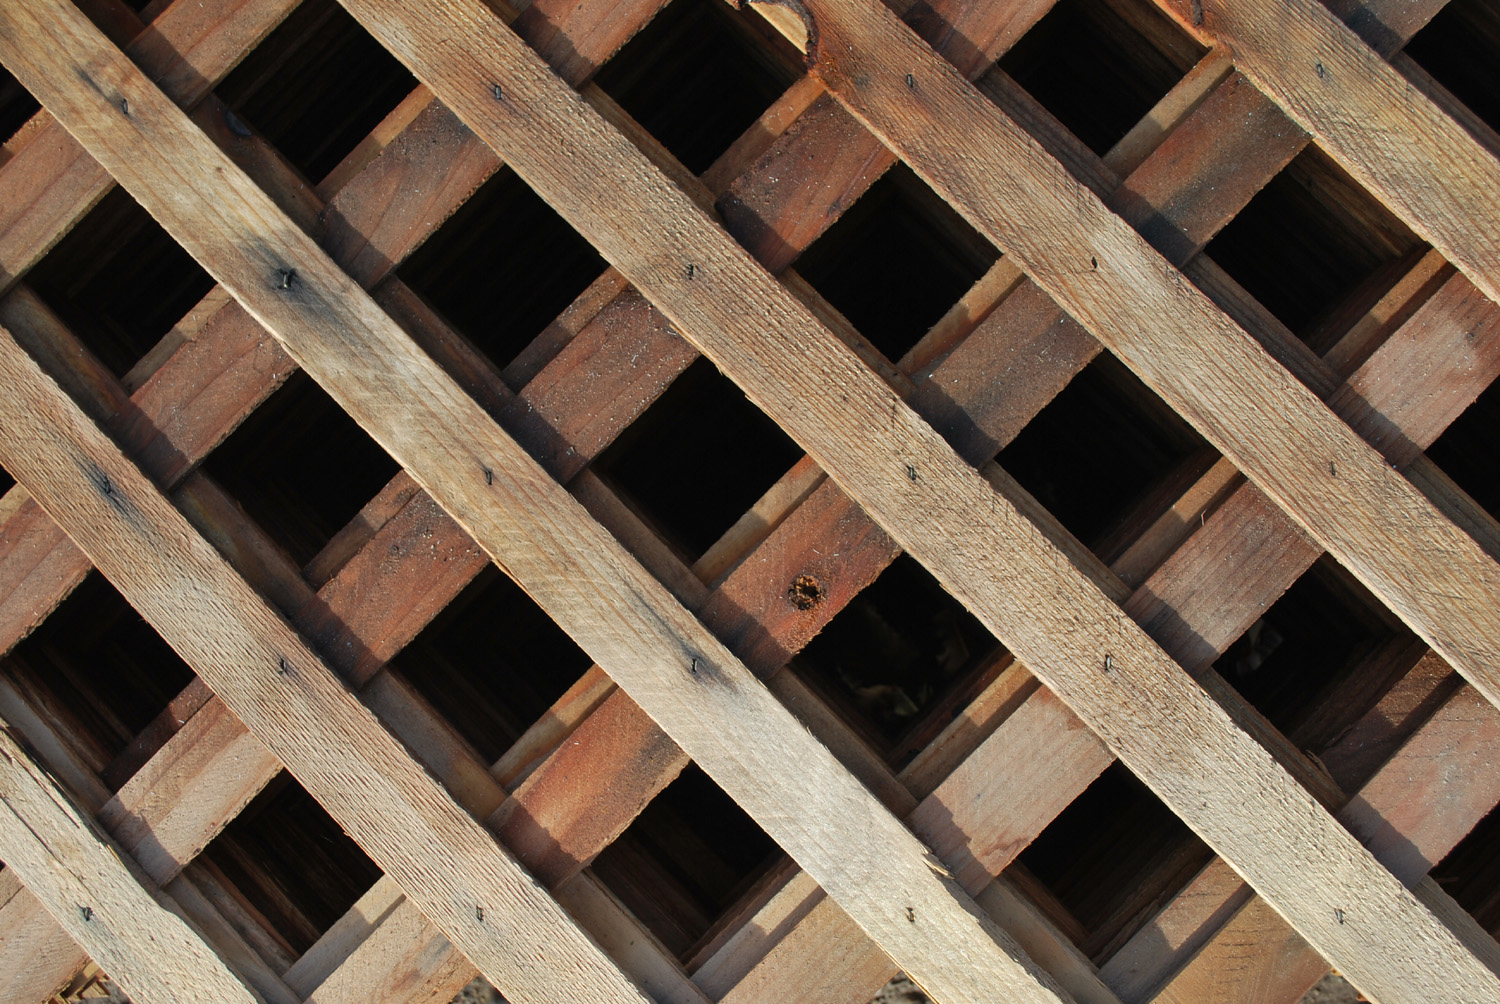 redwood lattice